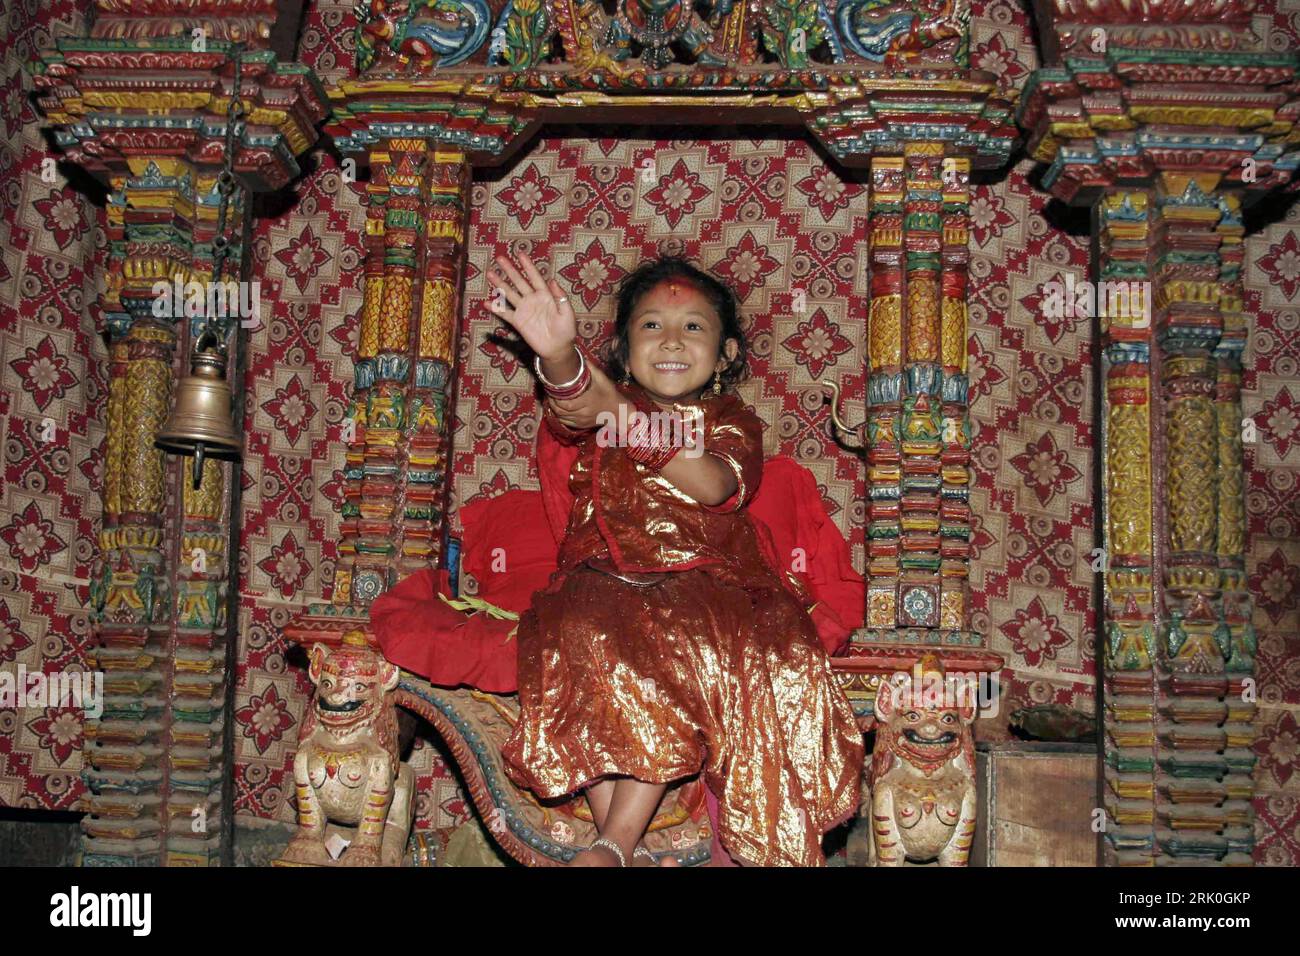 Bildnummer: 52737550 Datum: 14.10.2008 Copyright: imago/Xinhua Matina Shakya als Lebende Göttin Kumari Shreeya Bajracharya anlässlich des Dashain-Fests in Kathmandu, Nepal PUBLICATIONxNOTxINxCHN , Personen , optimistisch; 2008, Kathmandu, Nepal , Art , premiumd; , quer, Kbdig, Einzelbild, Hinduismus, Religion, Randbild, People Bildnummer 52737550 Datum 14 10 2008 Copyright Imago XINHUA Matina Shakya als Live-Göttin Kumari Shreeya Bajracharya während der Dashain-Feste in Kathmandu Nepal PUBLICATIONxNOTxINxCHN People Optistic 2008 Kathmandu Nepal Kinderpremiere horizontal Kbdig Single H Stockfoto